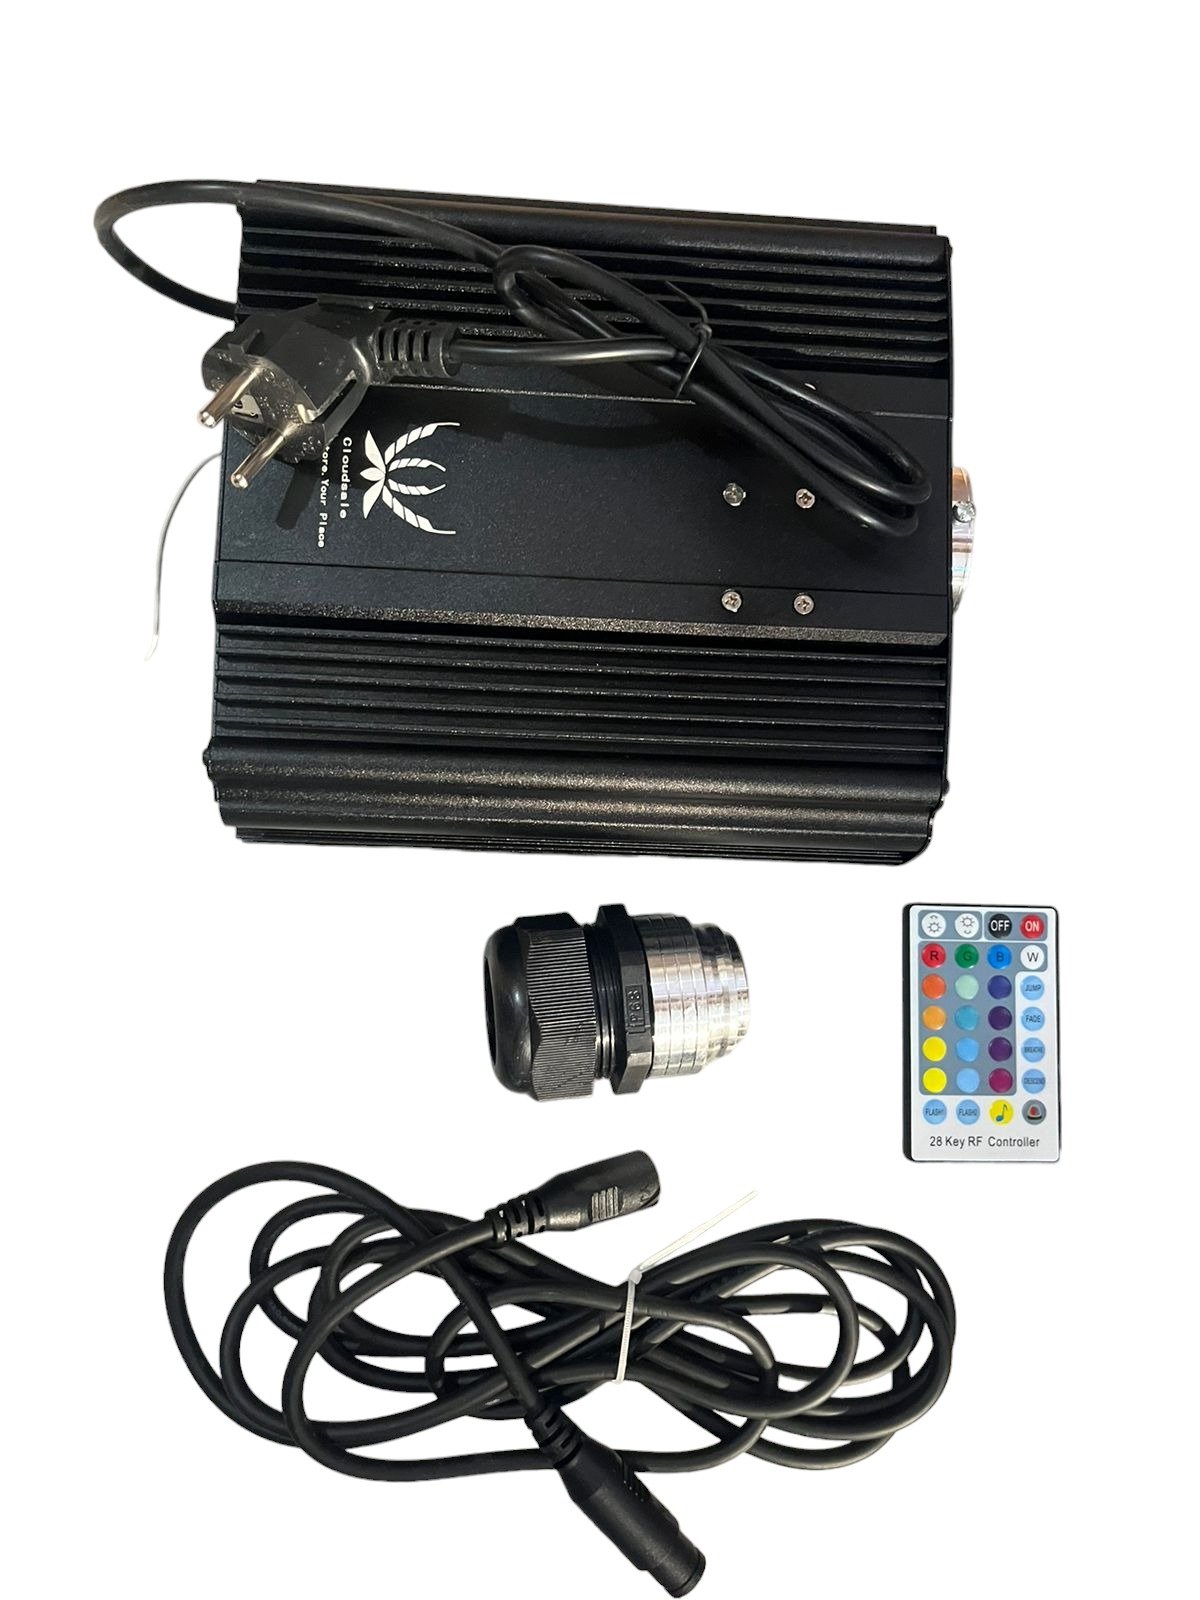 45W, DMX512 LED RGB Light Source with 28 Key Remote Control For Fiber Optic Lighting Star Ceiling Machine Image 